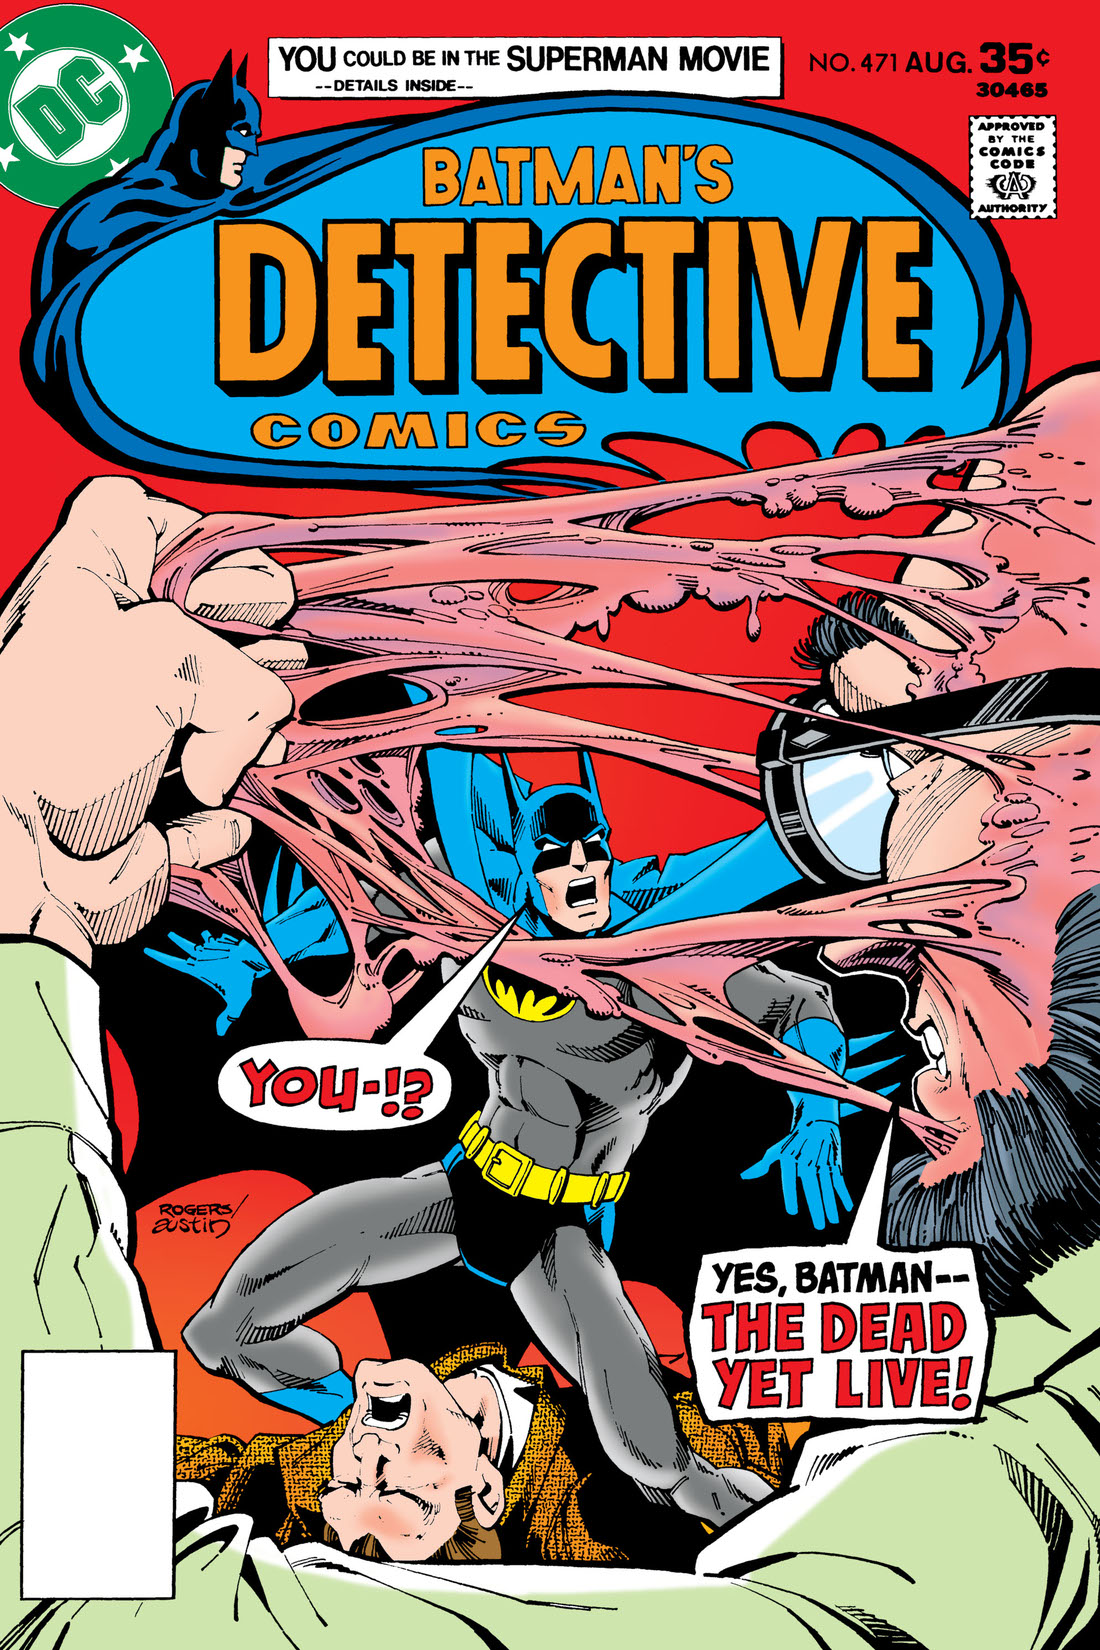 Detective Comics (1937-) #471 preview images